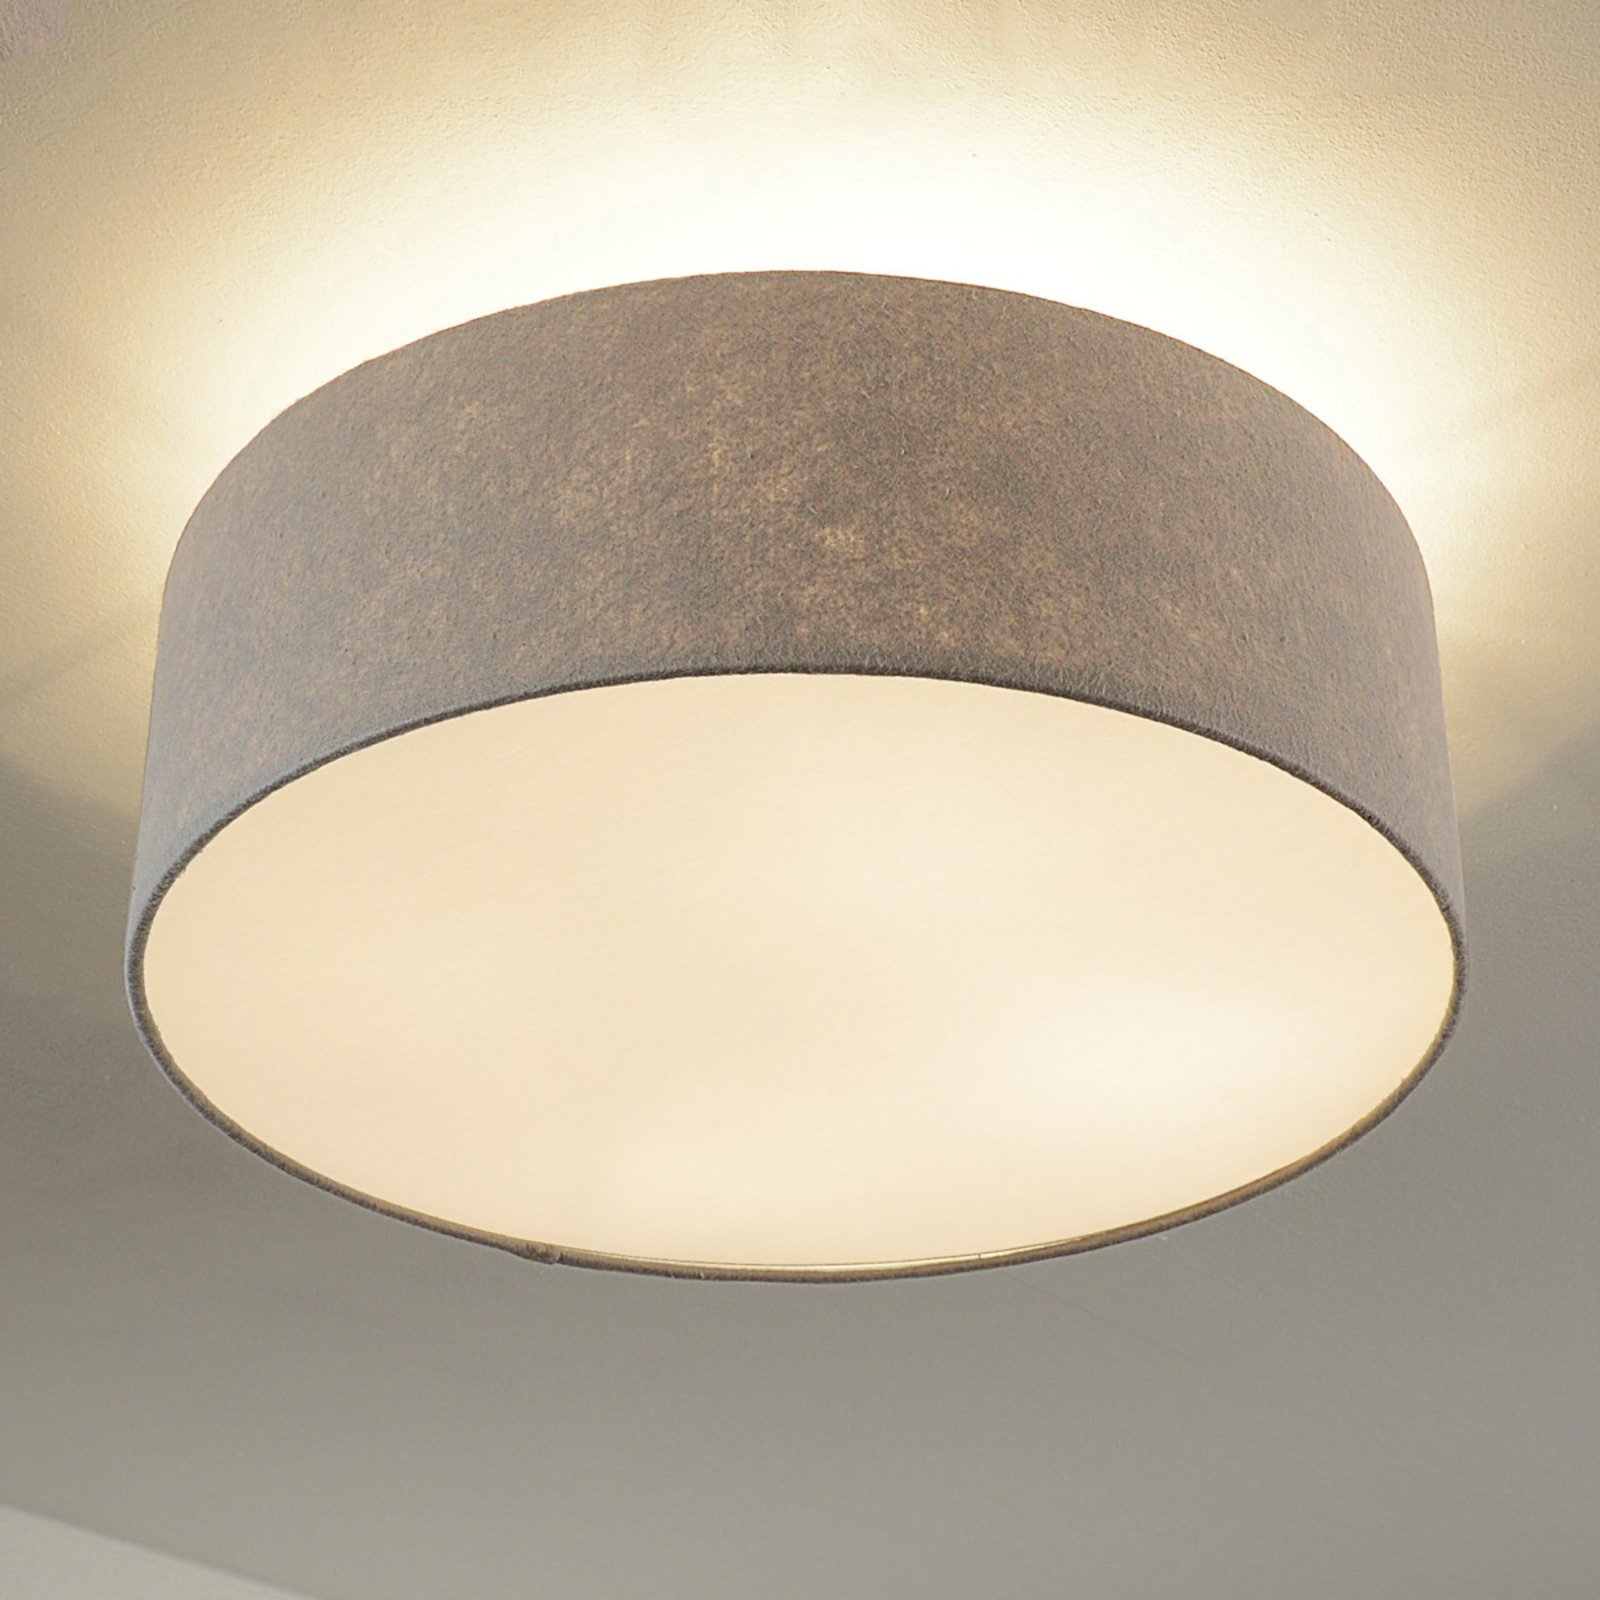 Gala ceiling light, 50 cm, grey felt lampshade